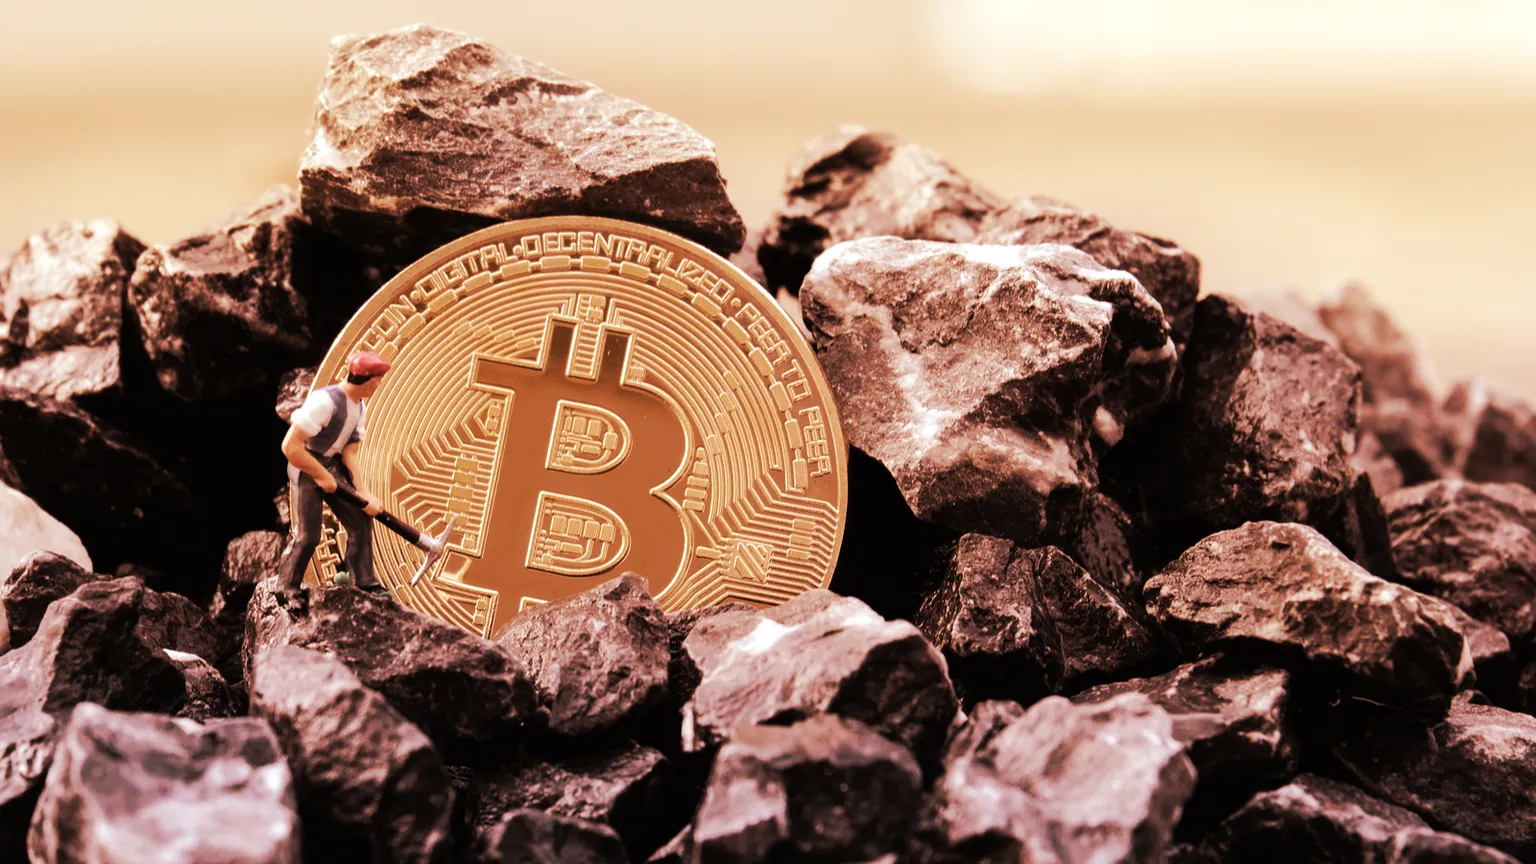 Core Scientific buys almost 18,000 Bitcoin miners. Image: Shutterstock